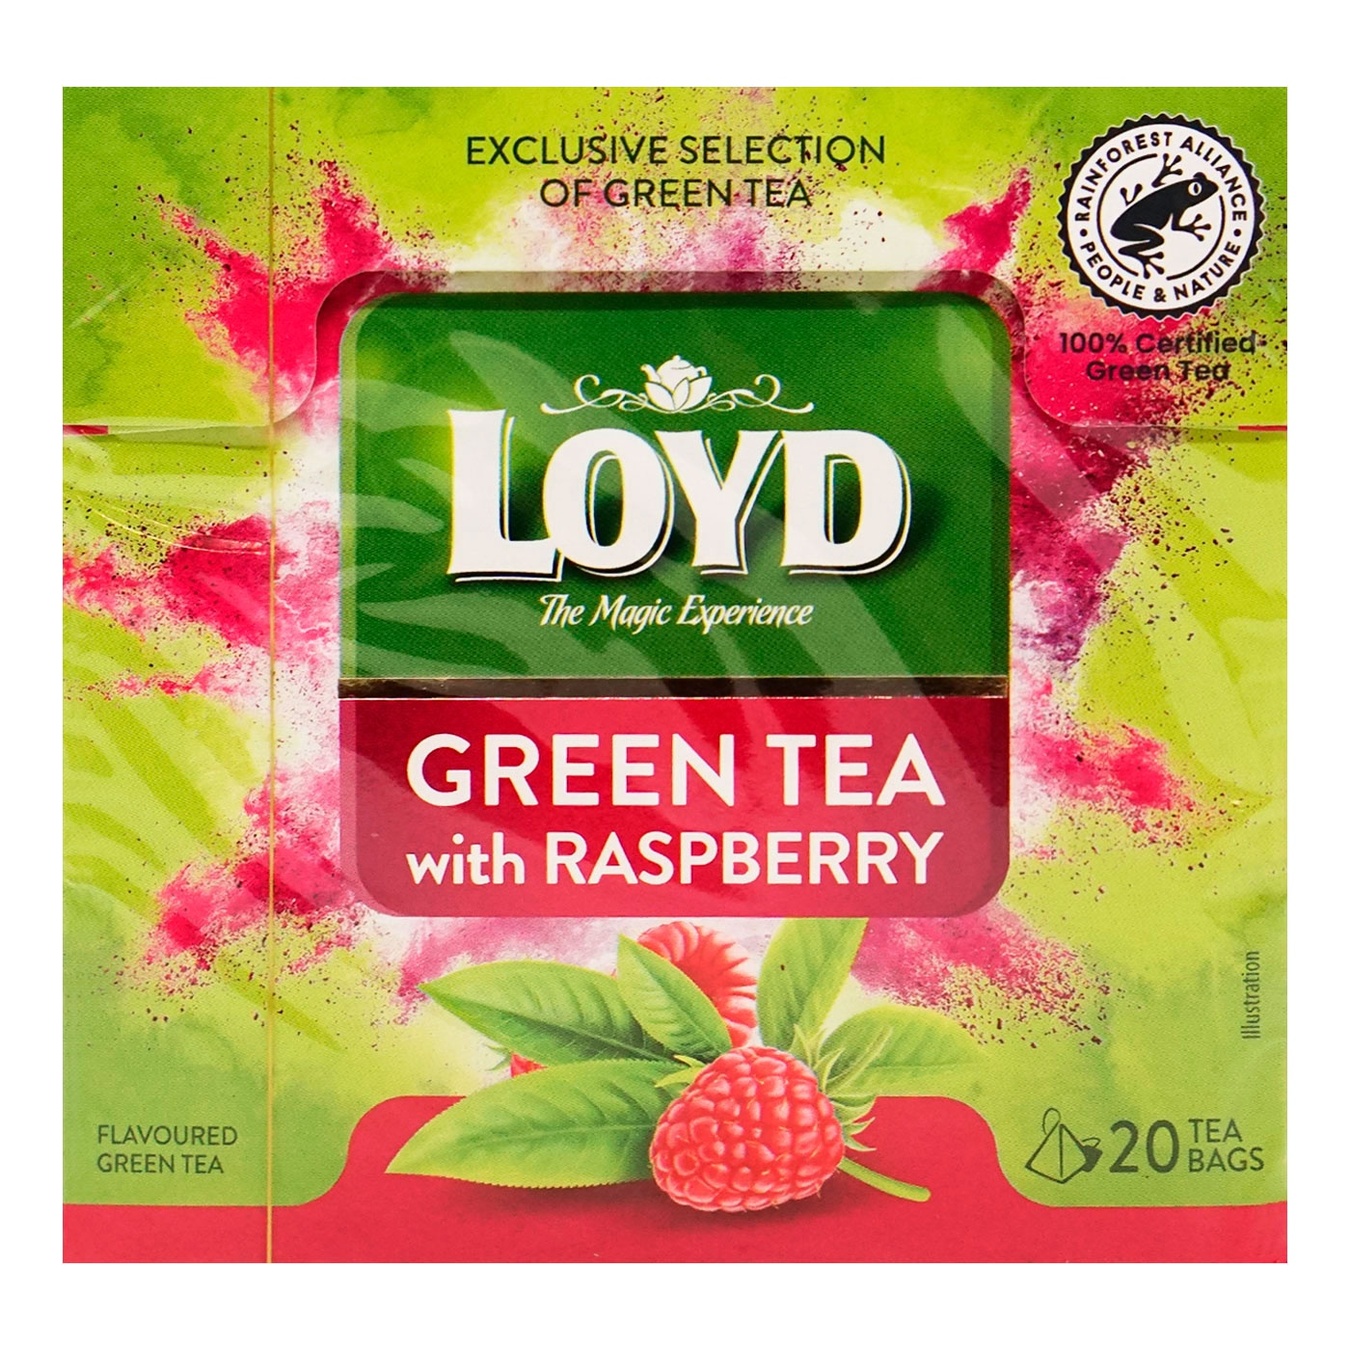 LOYD green tea with a taste of raspberry 15g*20pcs